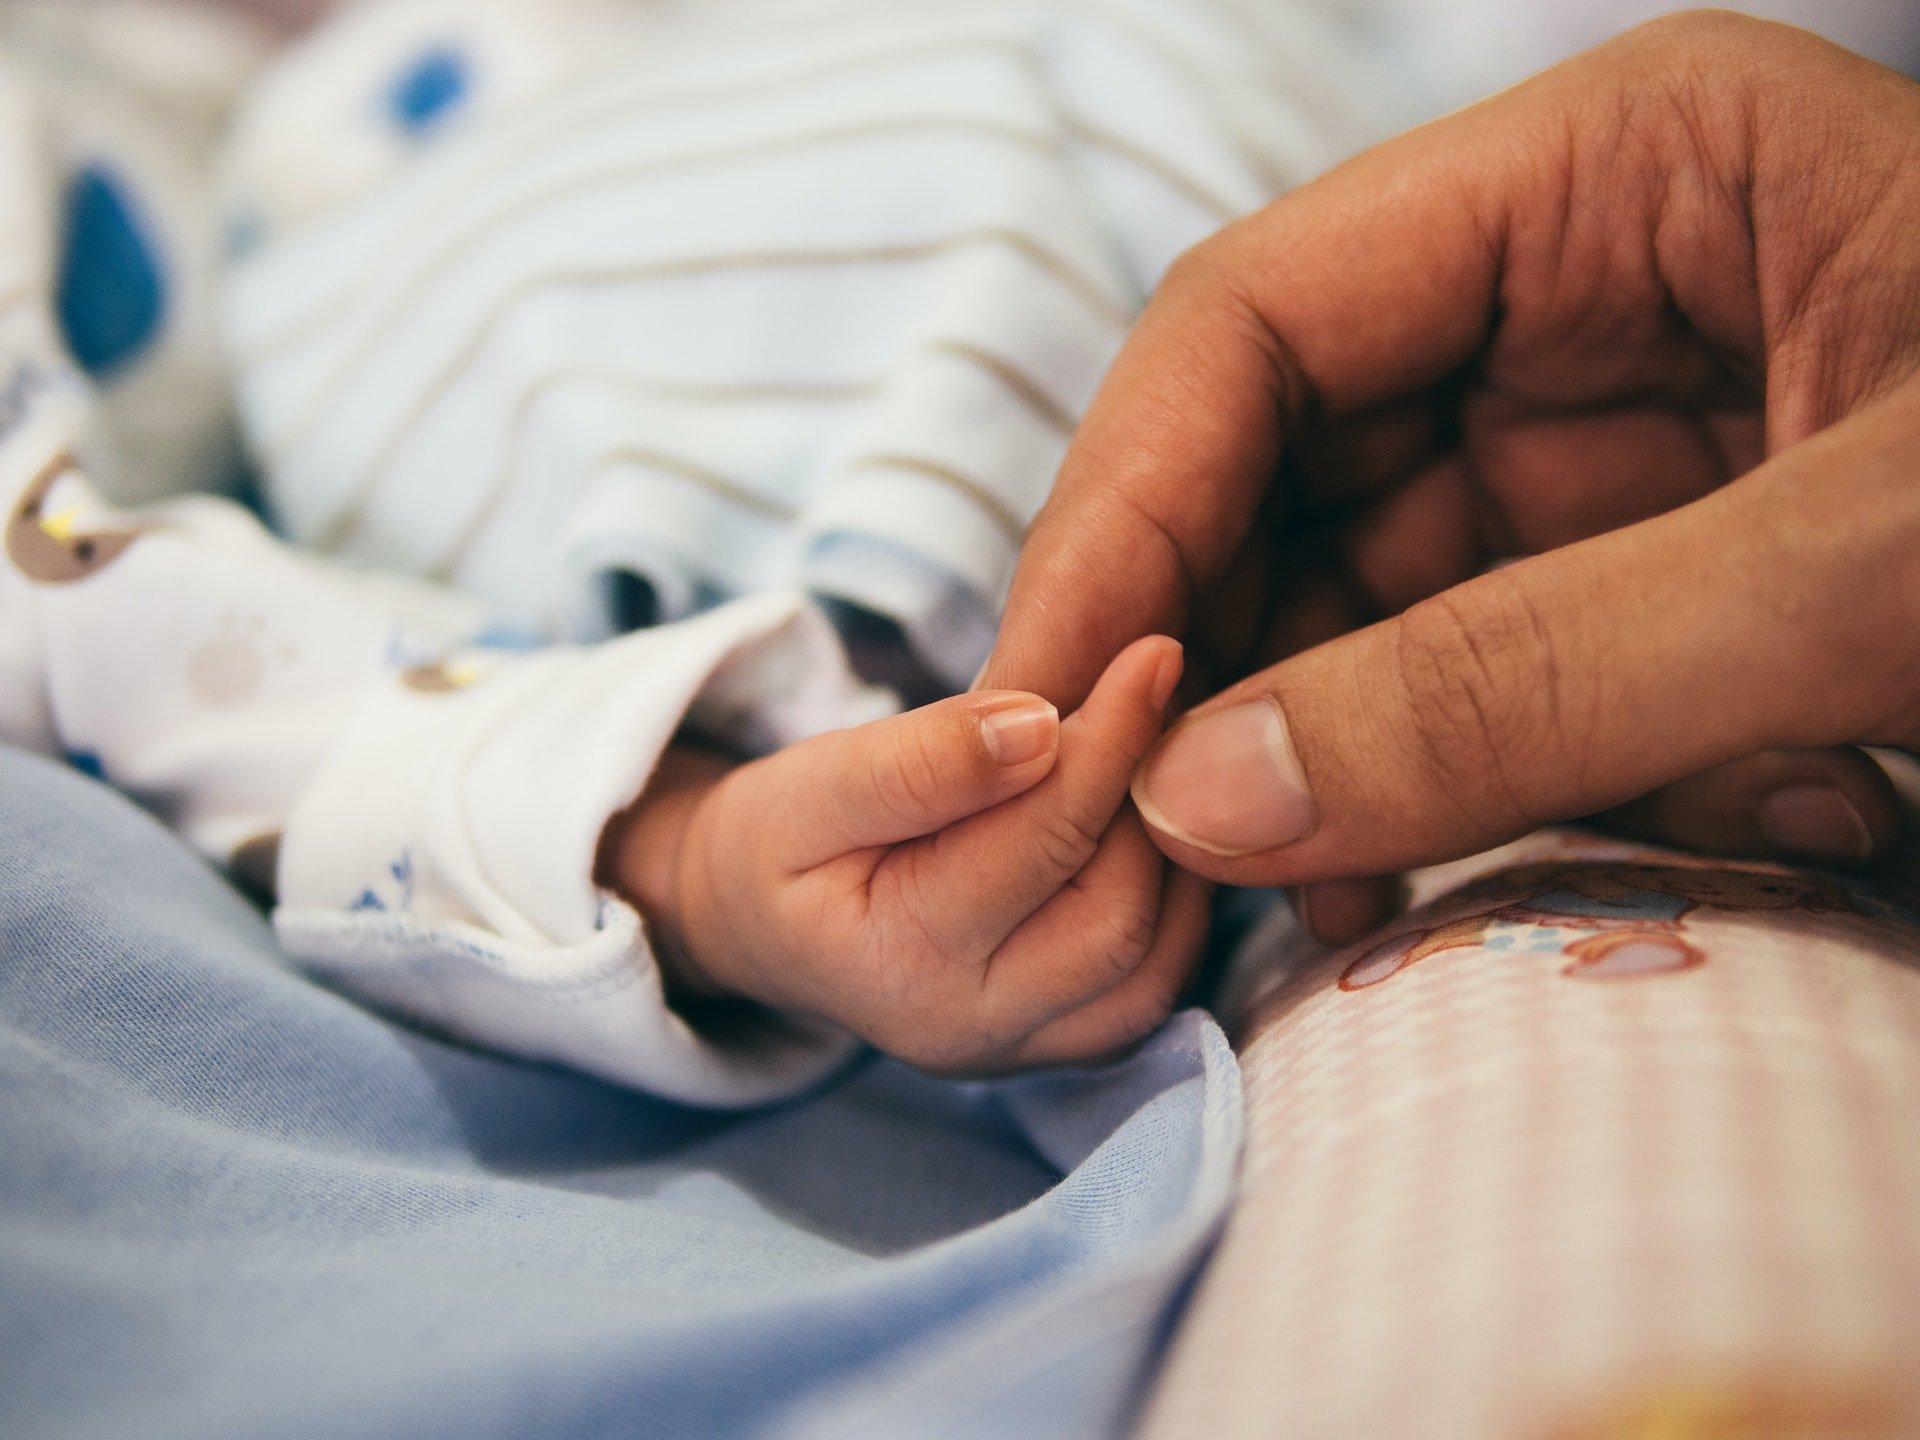 Newborn with its parent in hospital. | Source: Unsplash